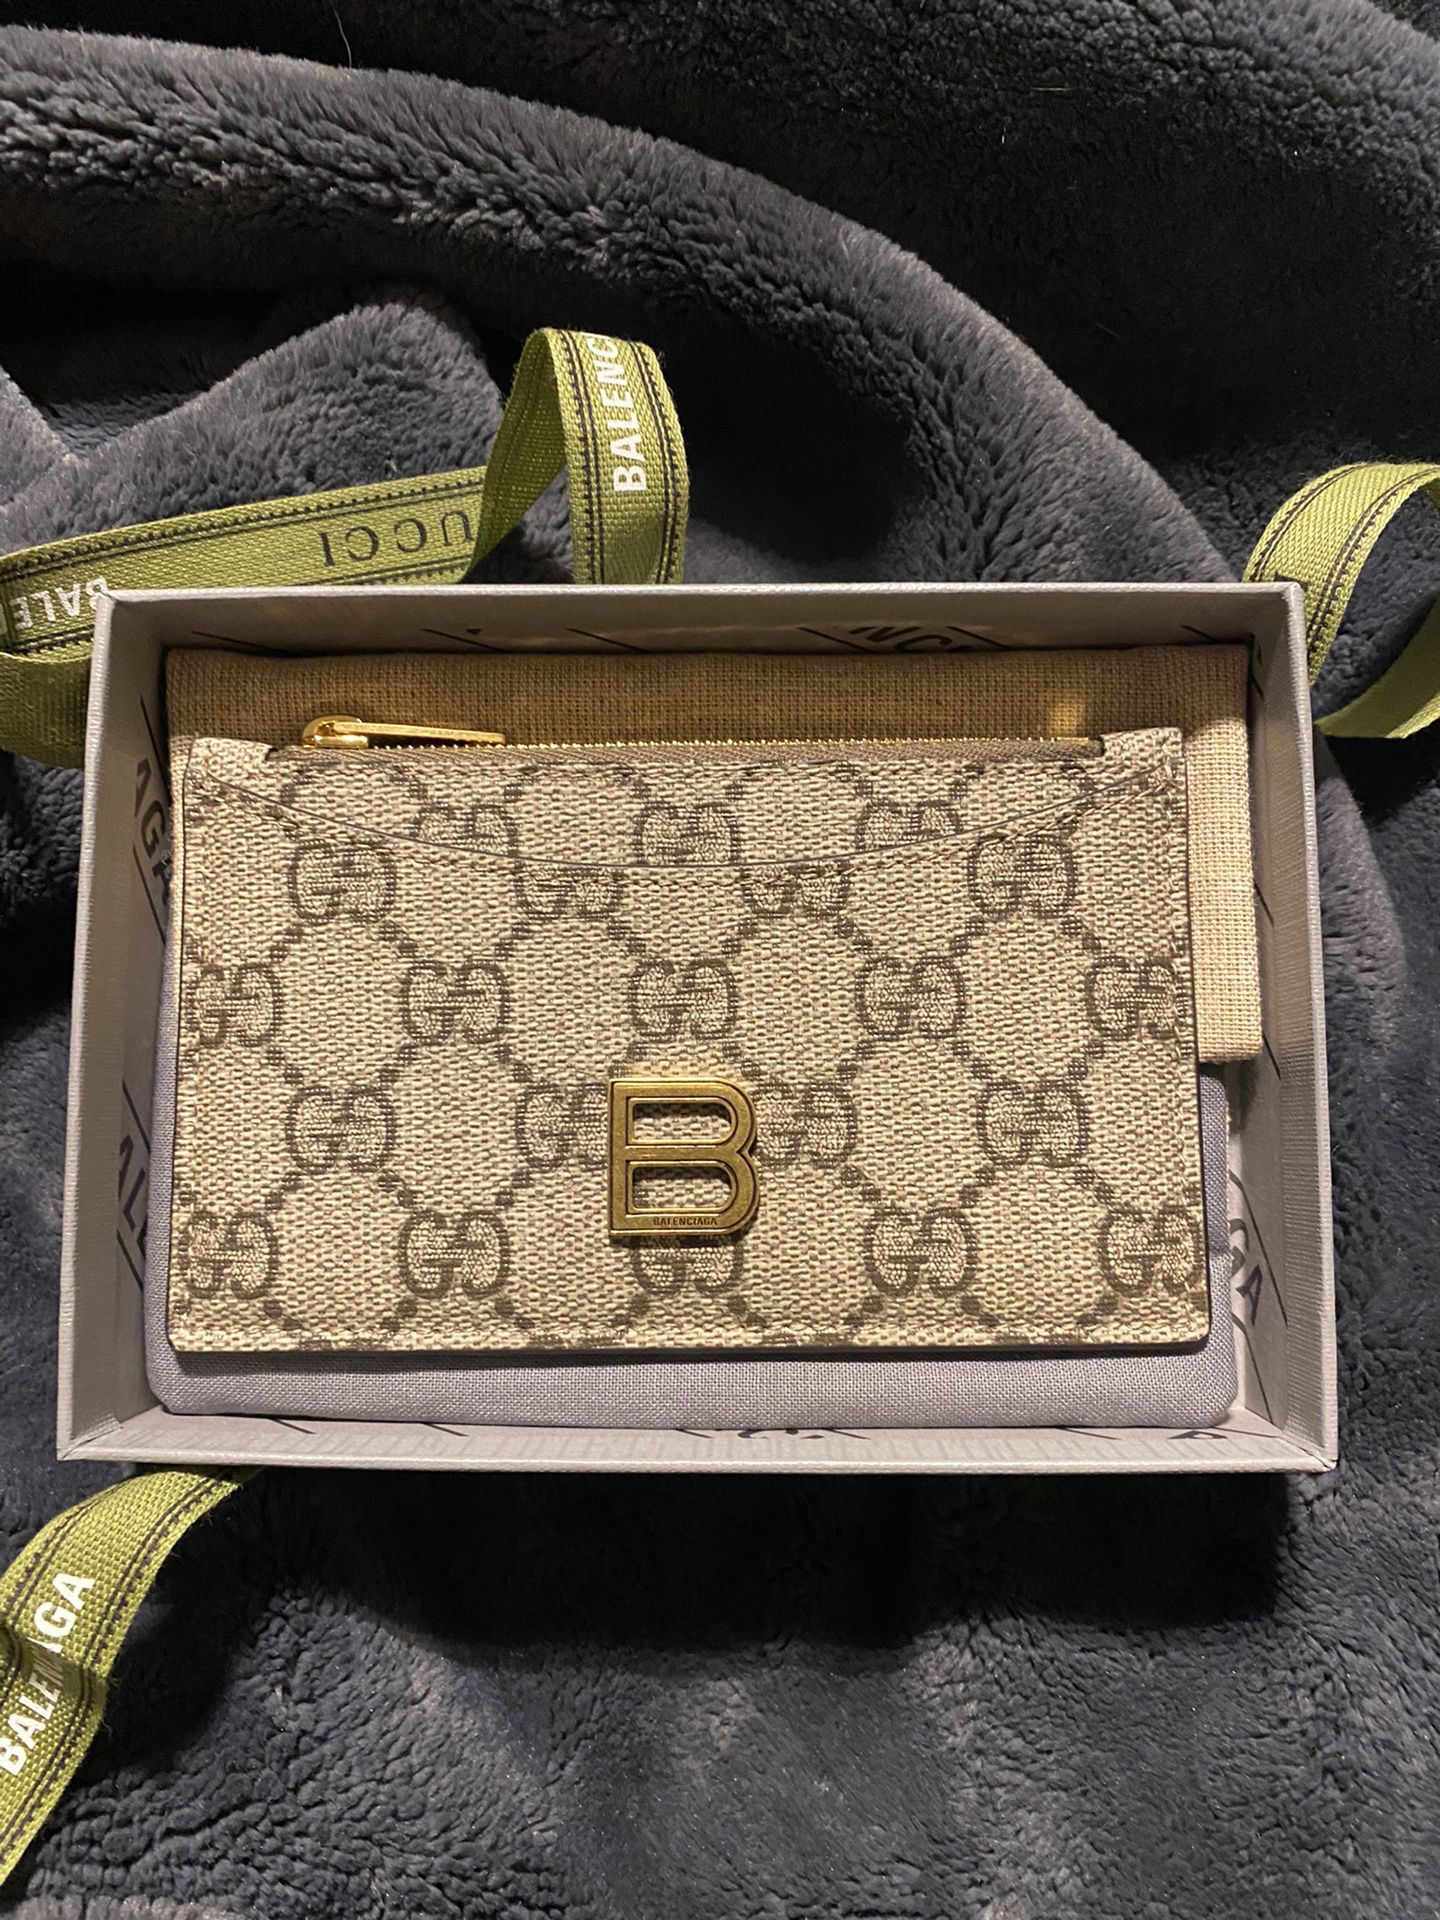 Gucci Balenciaga Hack Long Wallet for Sale in Joliet, IL - OfferUp